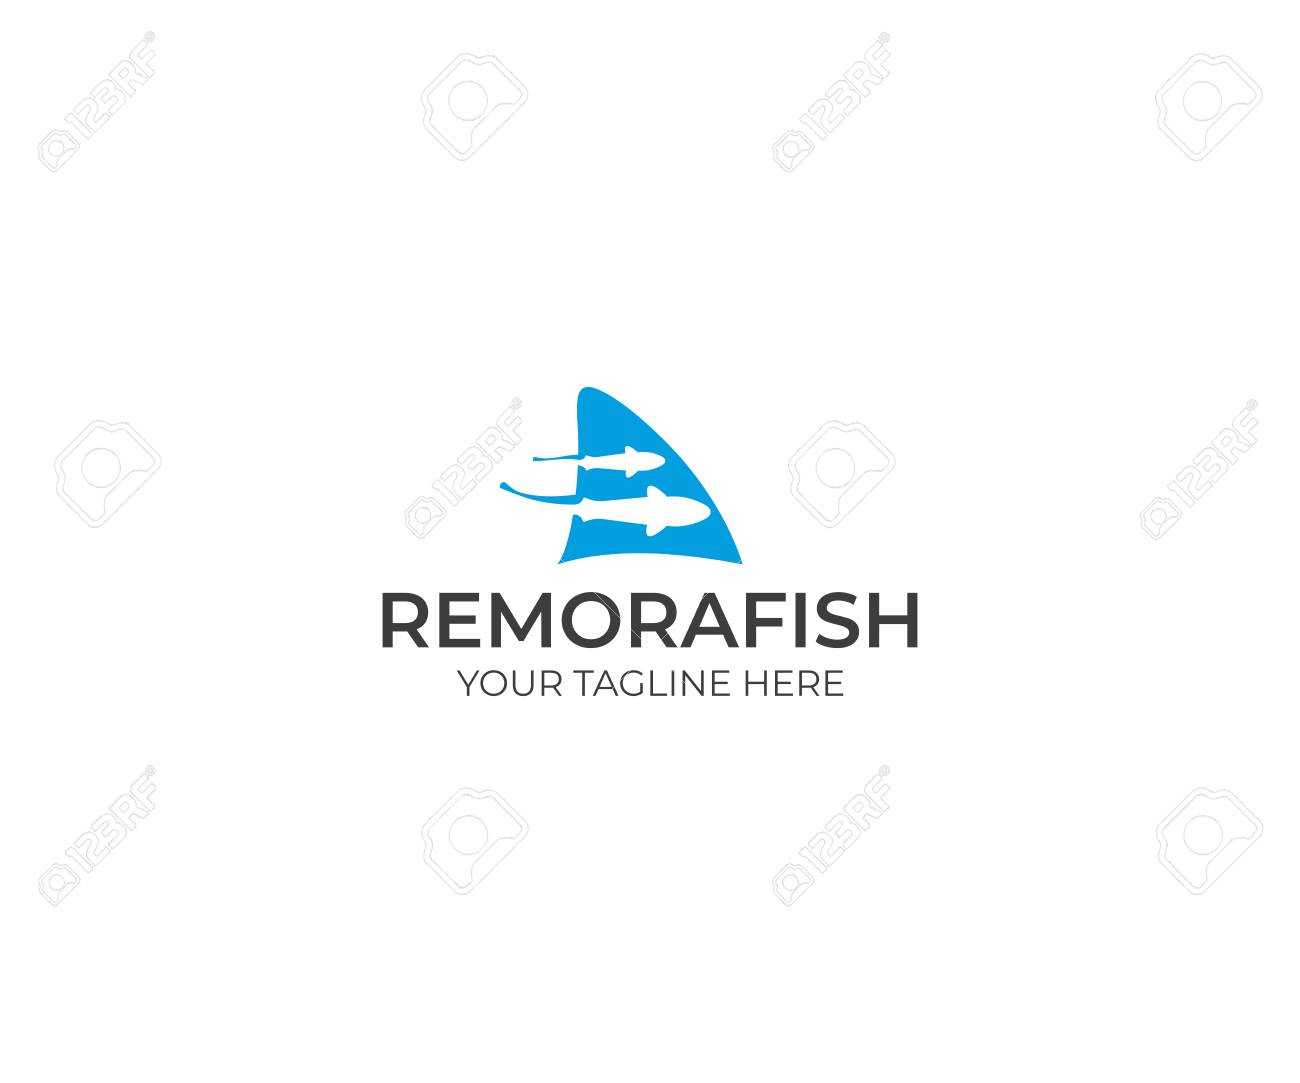 Remora Fish And Shark Fin Logo Template. Sharksucker Vector Design With Sharkfin Banner Template